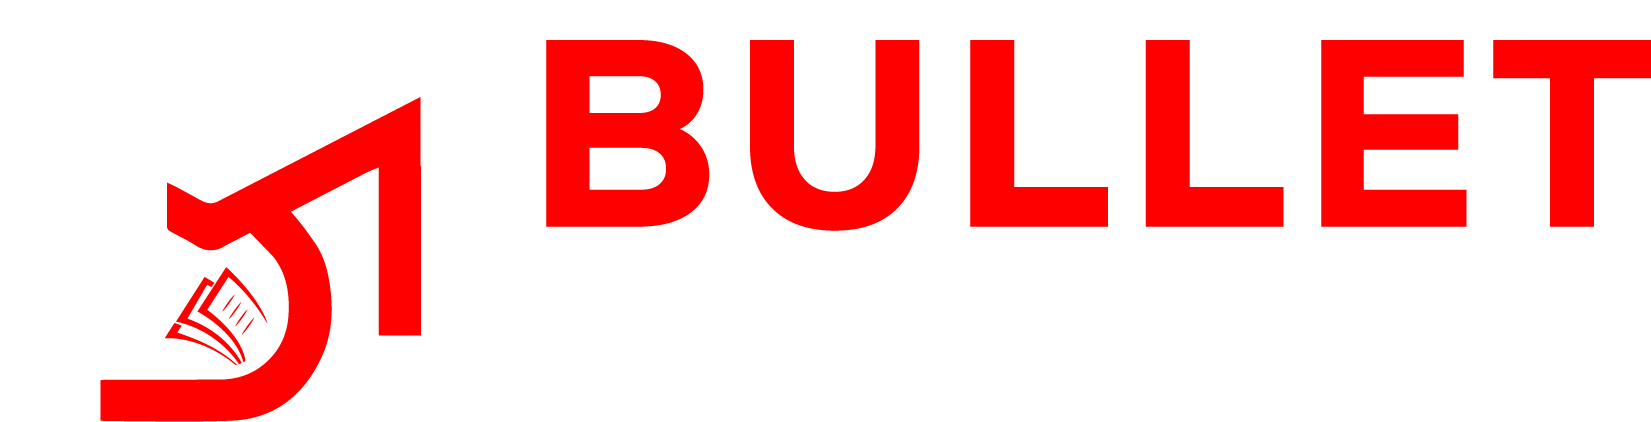 Bullet Magazines